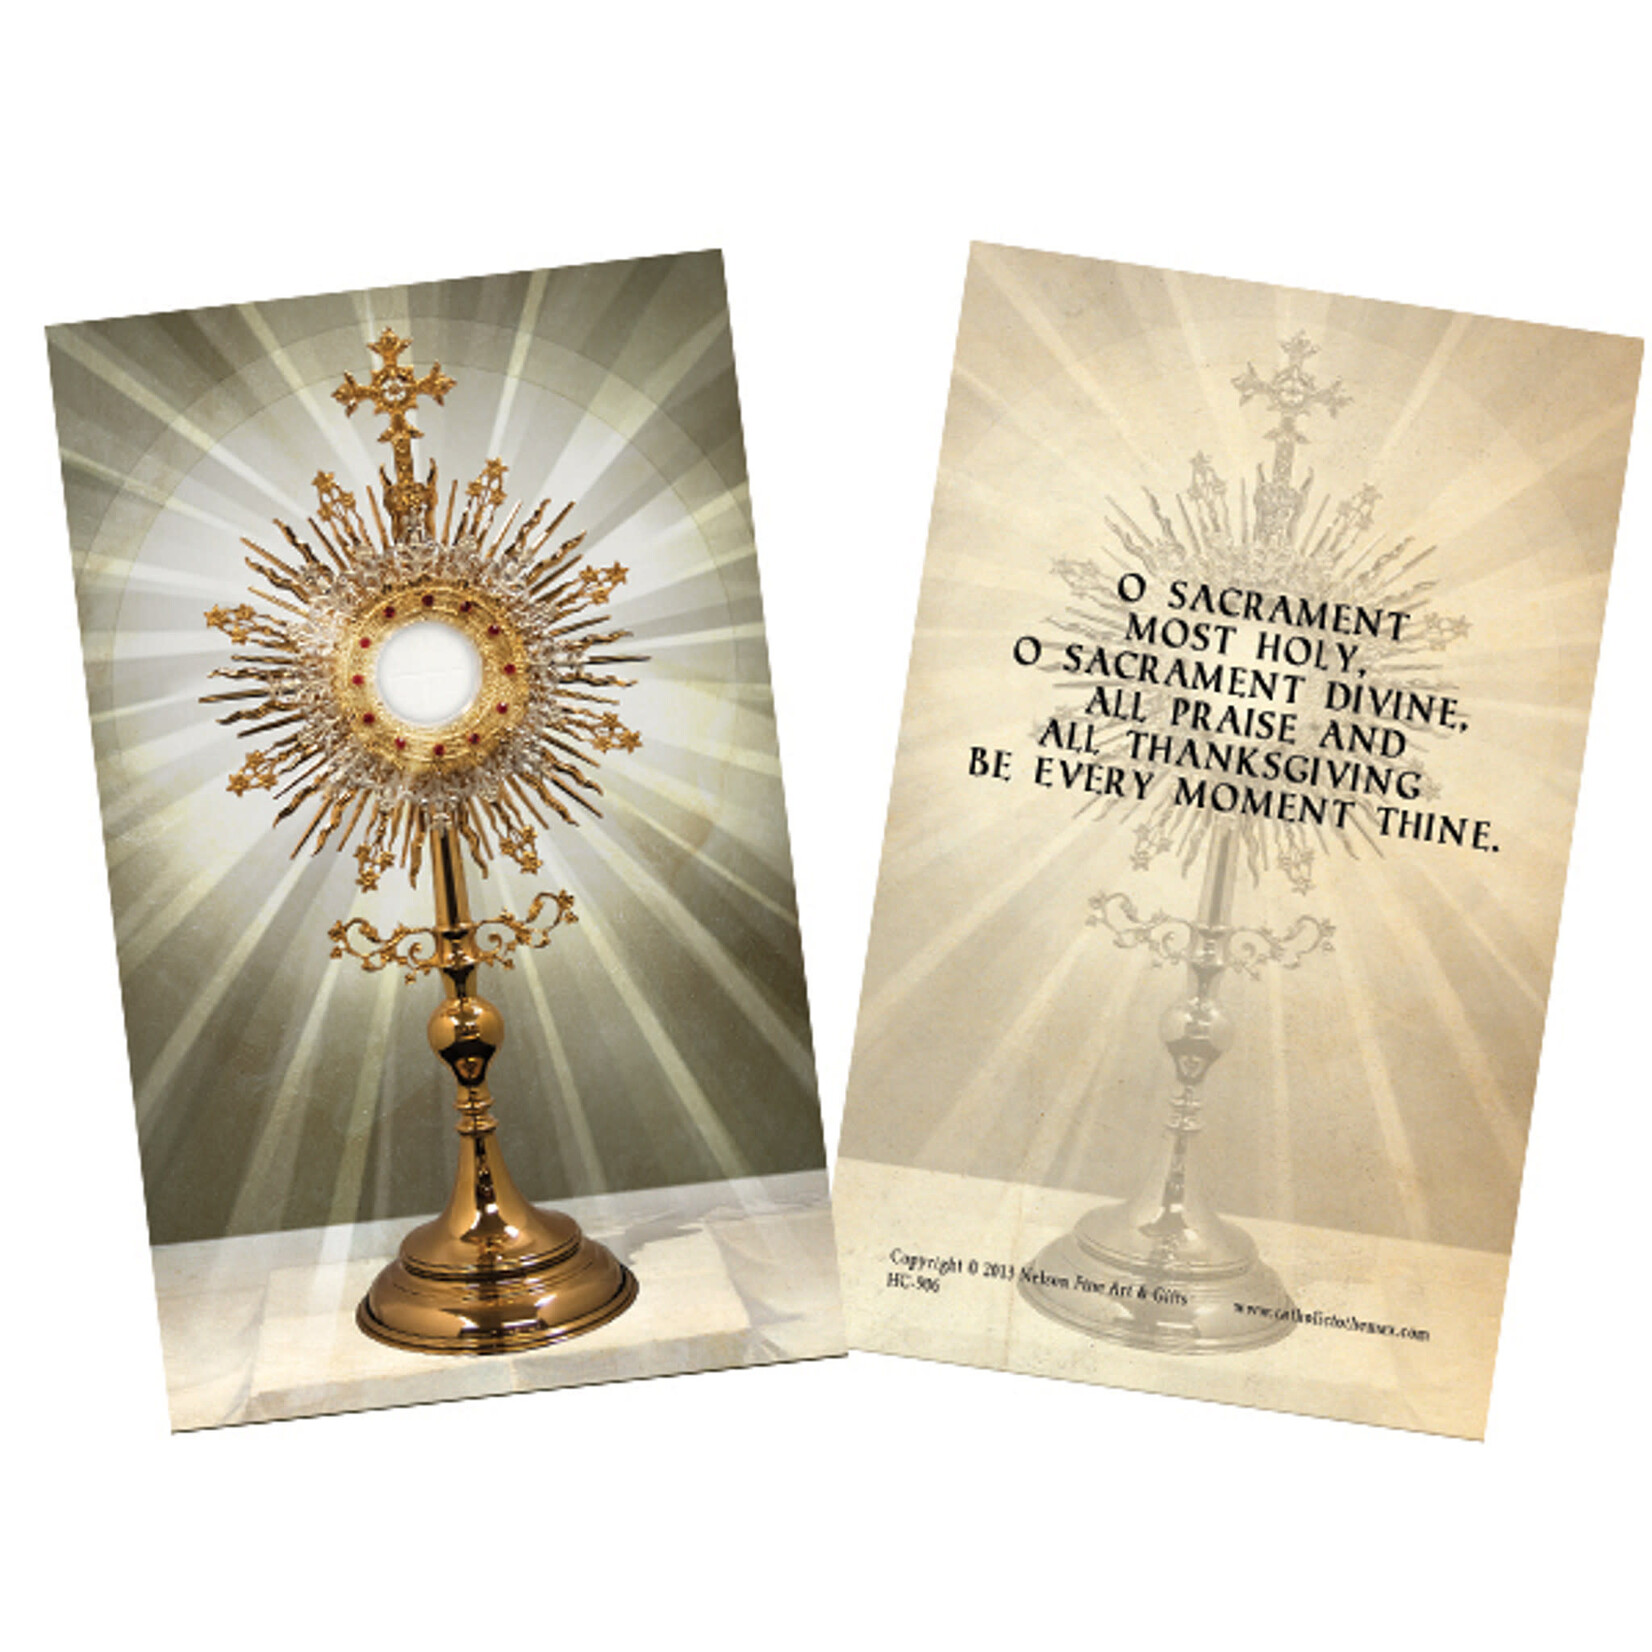 Prayer Card O Sacrament Most Holy